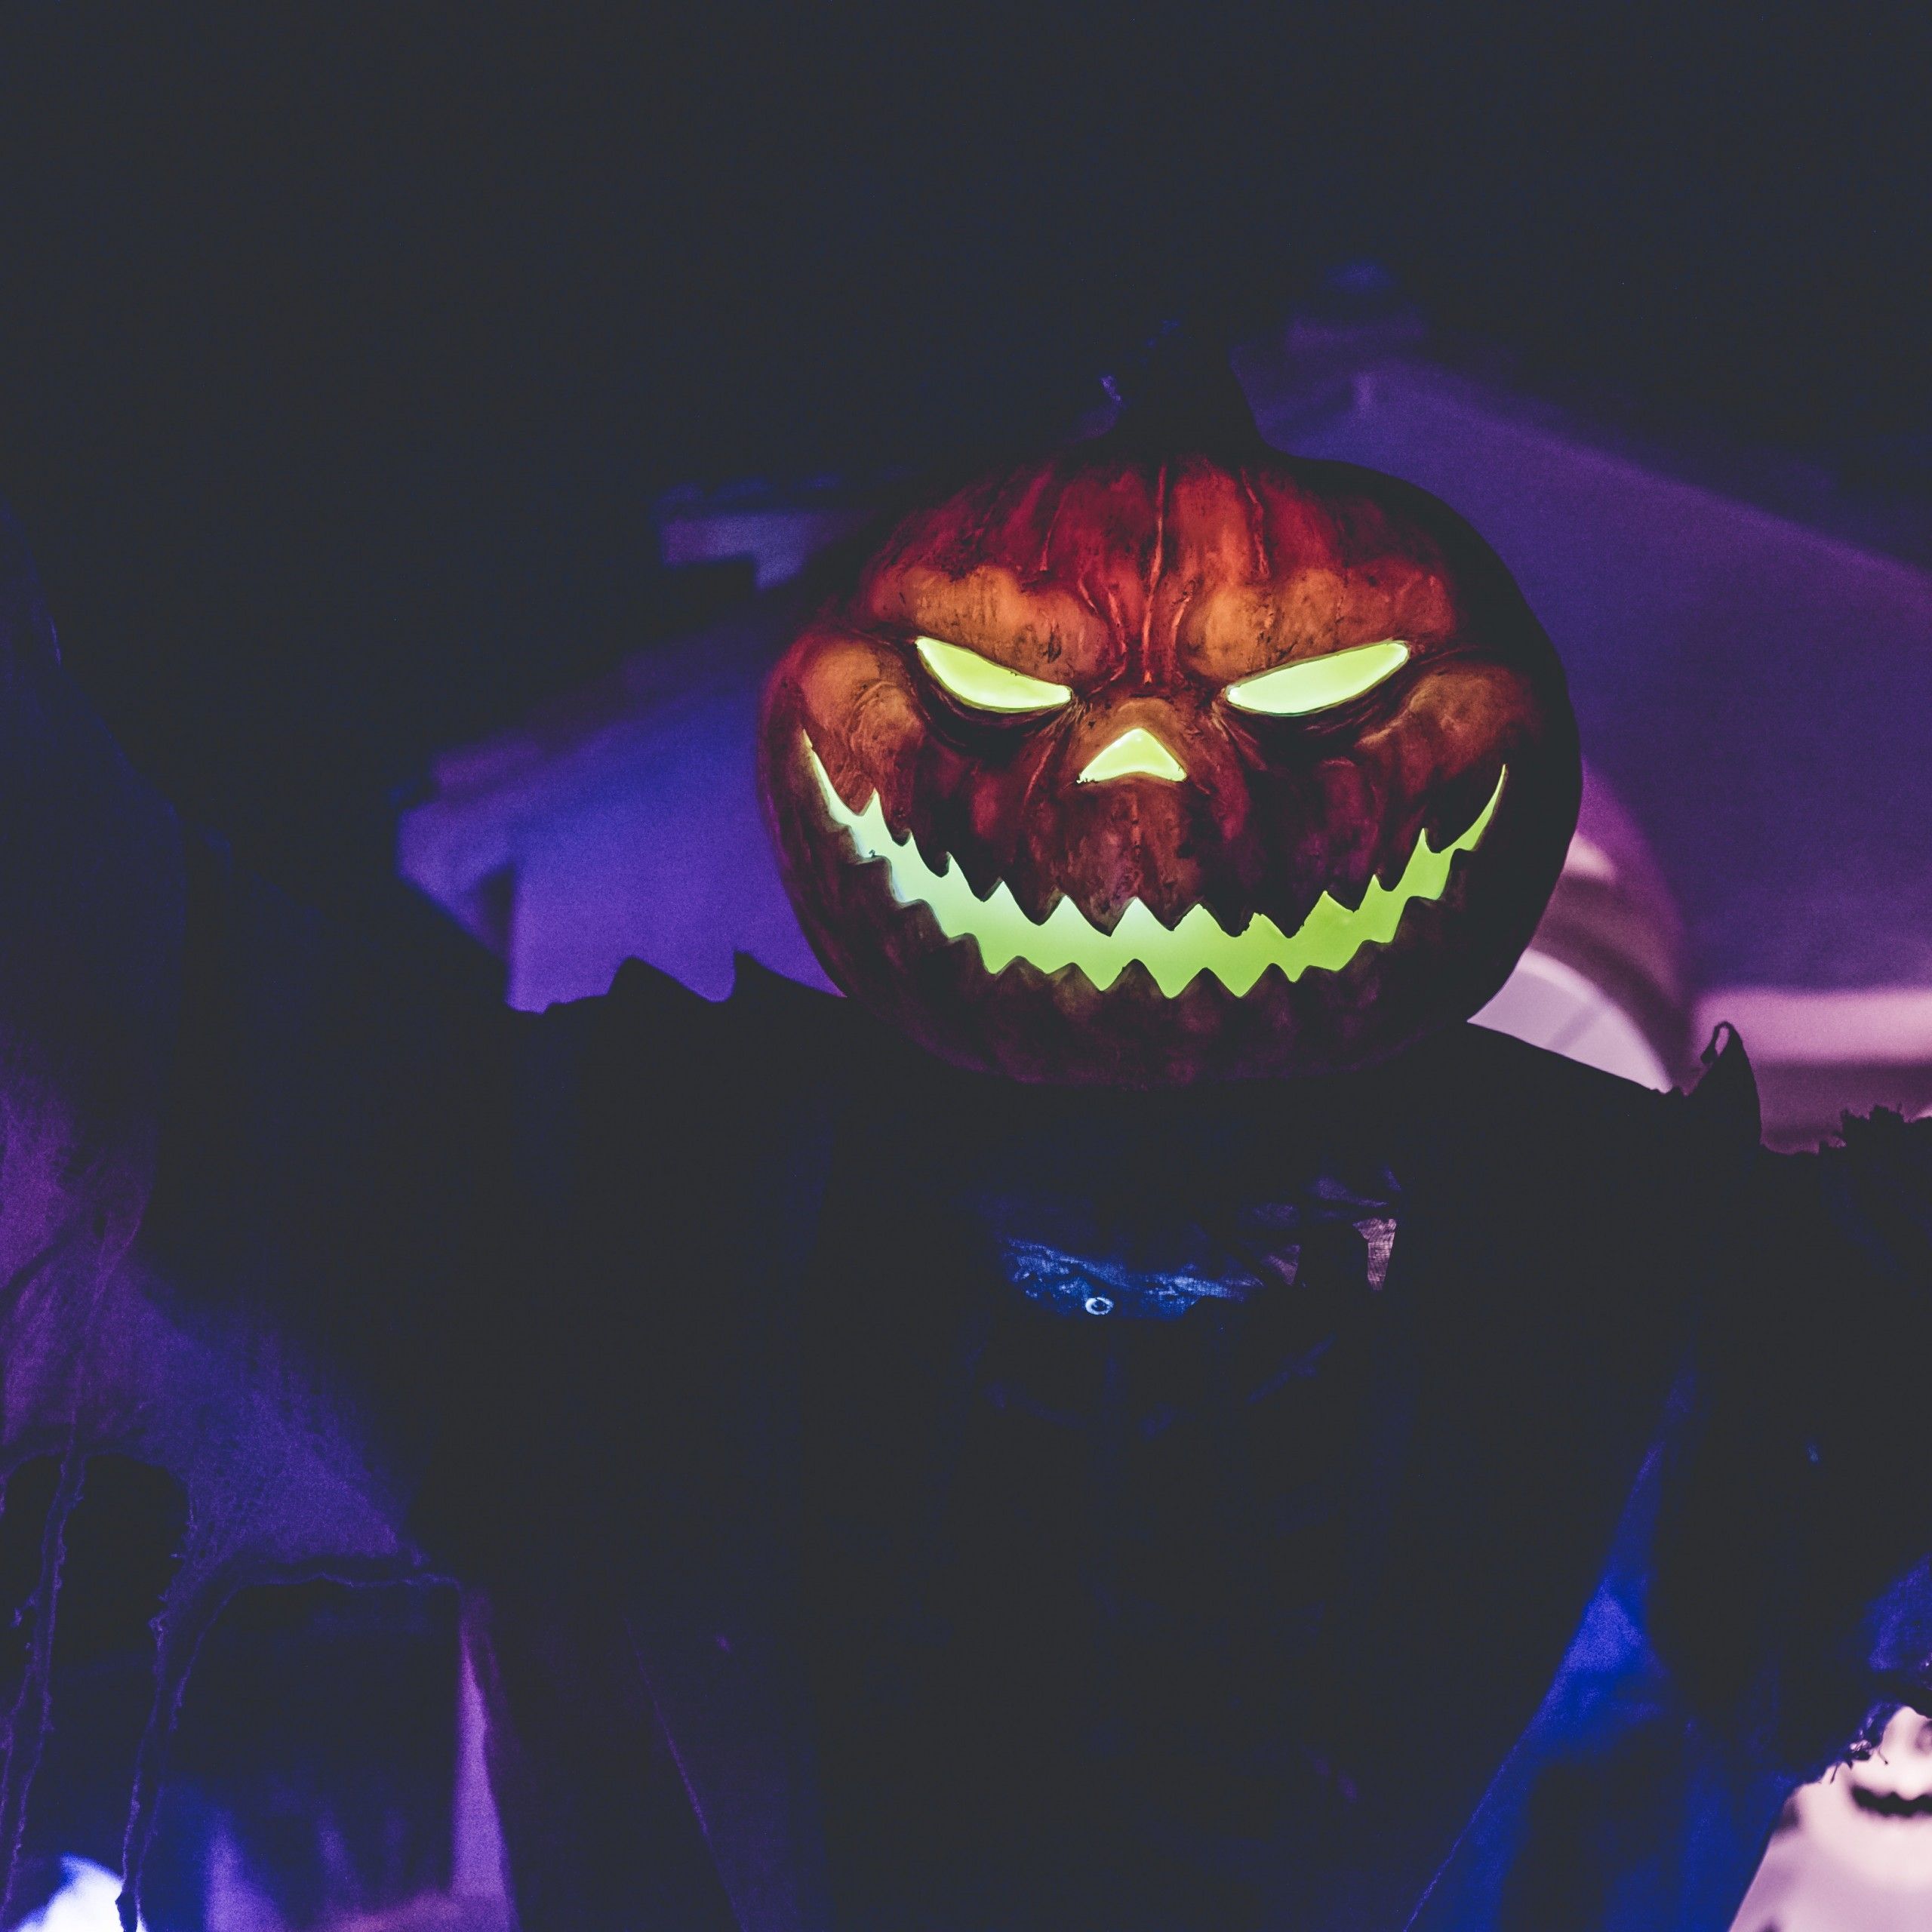 Wallpaper Jack O' Lantern, Halloween Pumpkin, Scary, Neon, 4K, Celebrations / Halloween,. Wallpaper For IPhone, Android, Mobile And Desktop